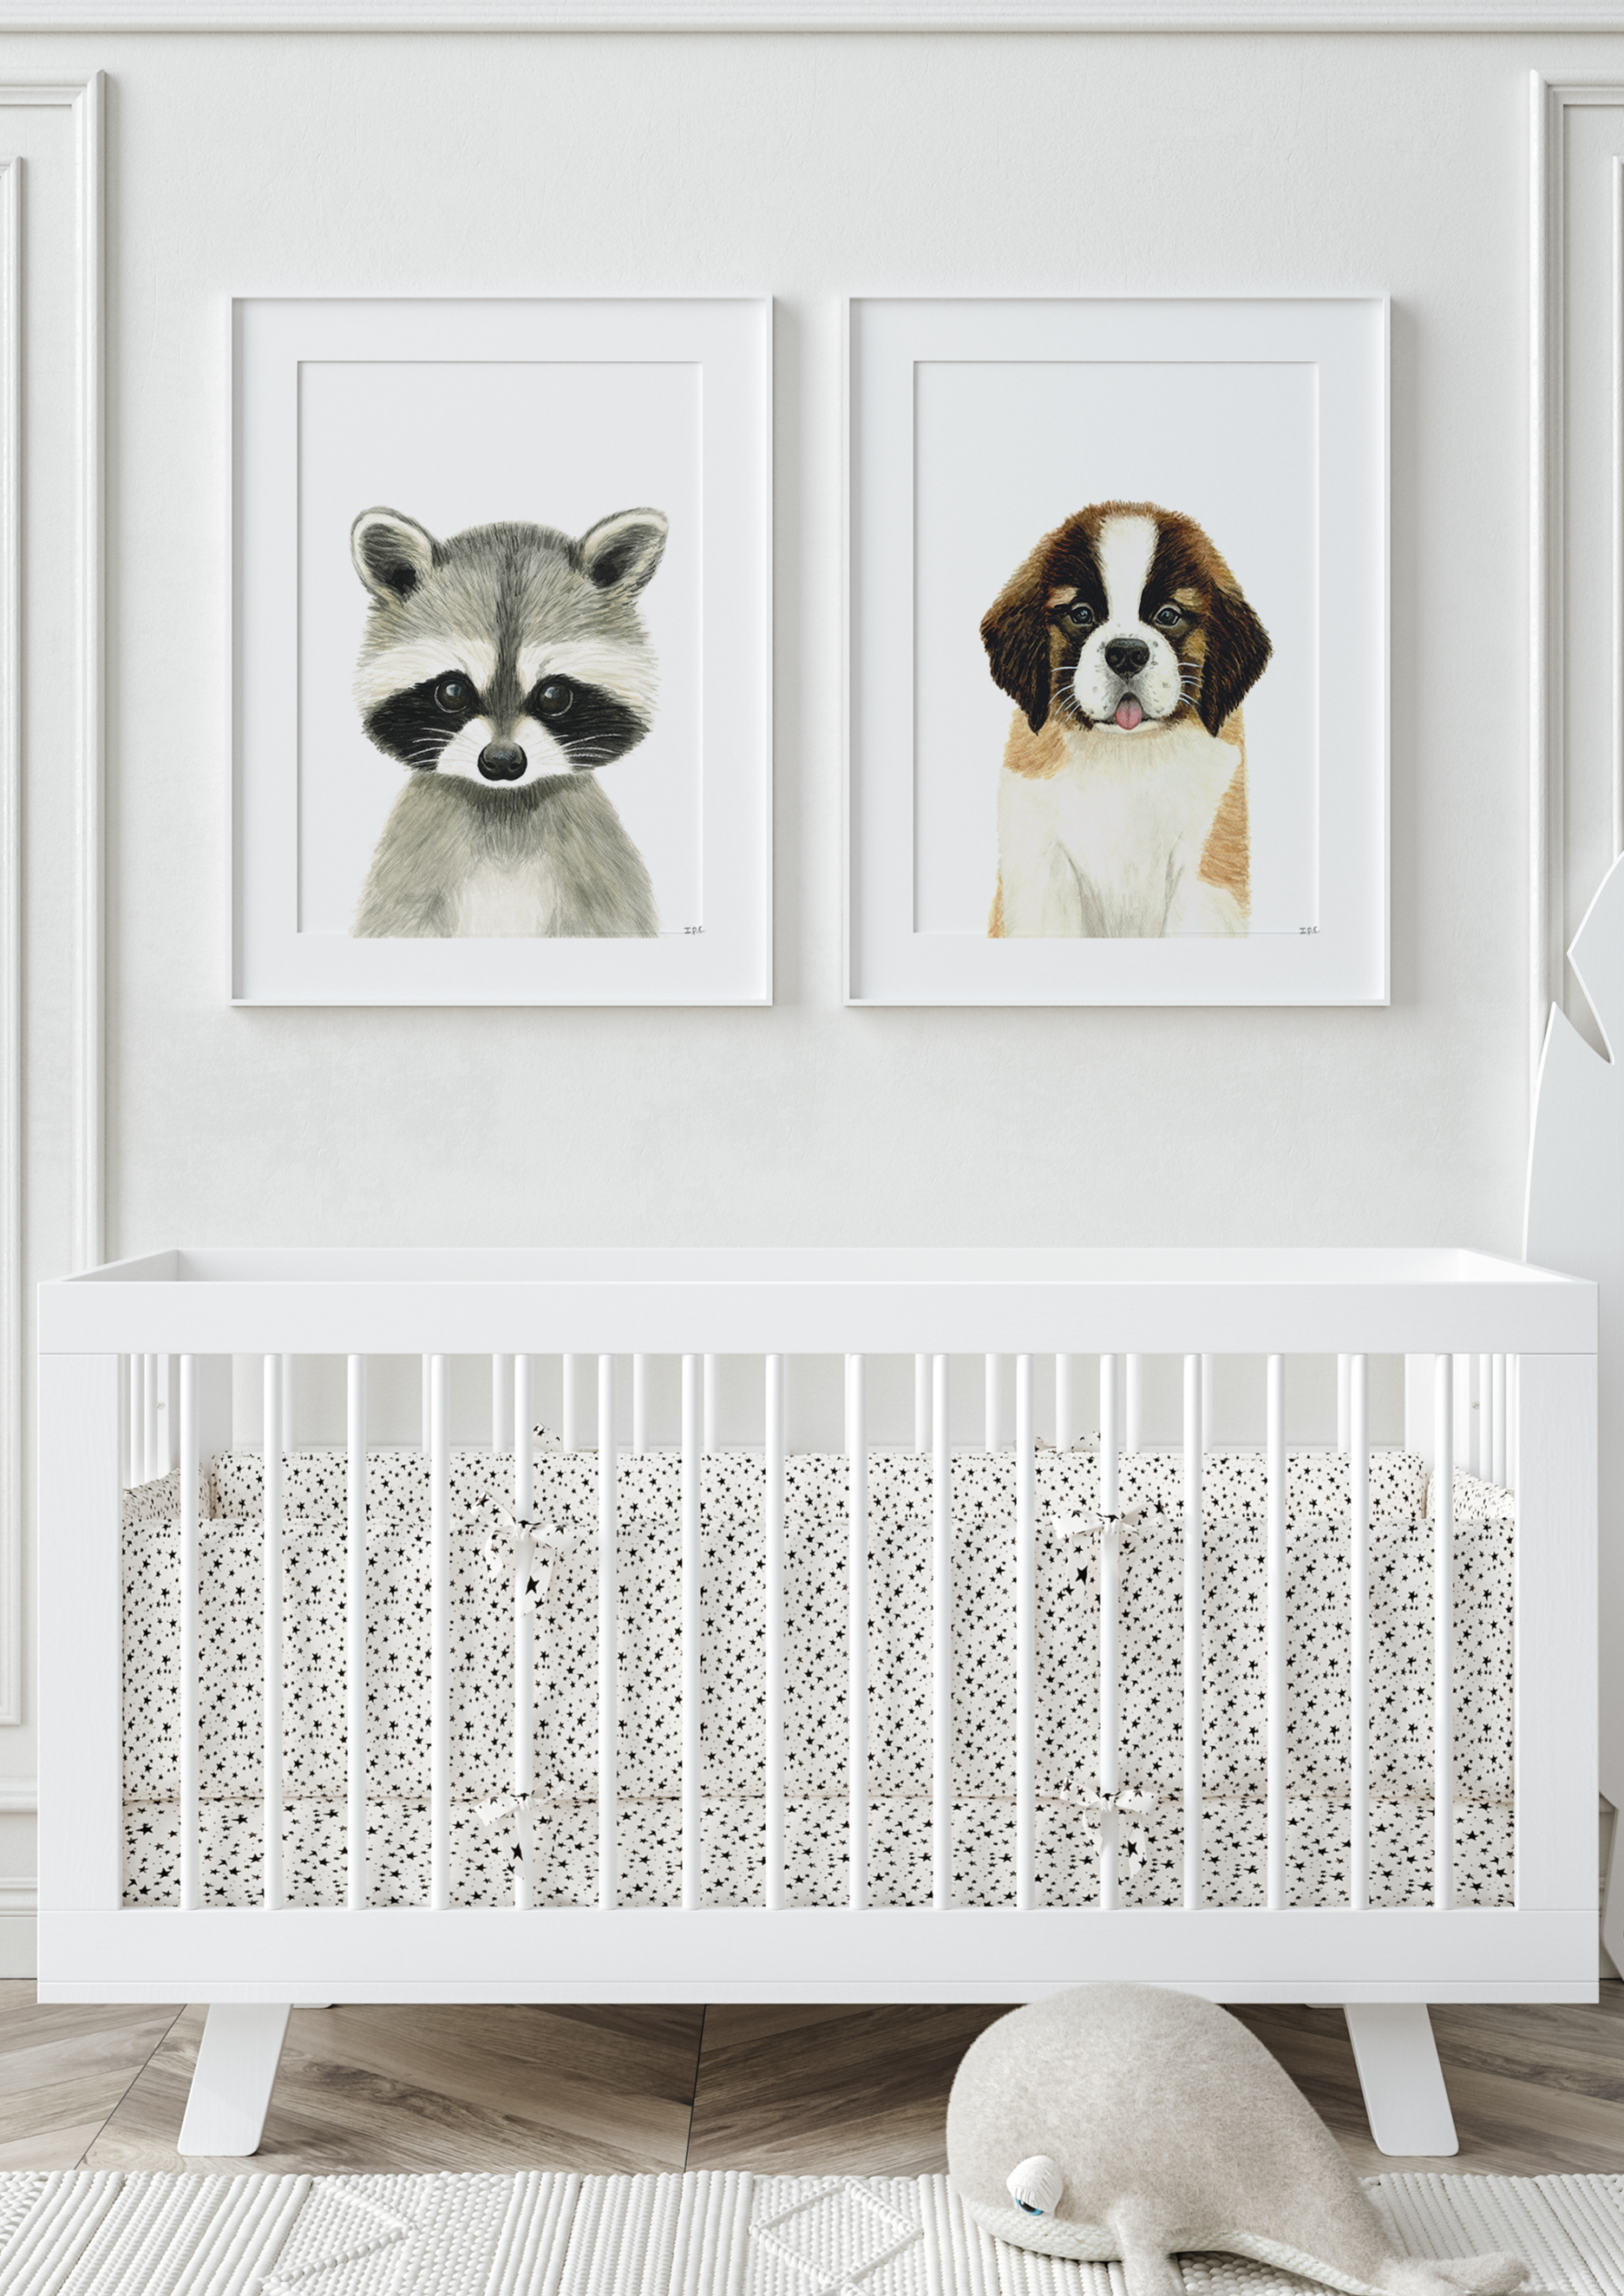 Set of 2 nursery wall art prints: racoon and St. Bernard dog